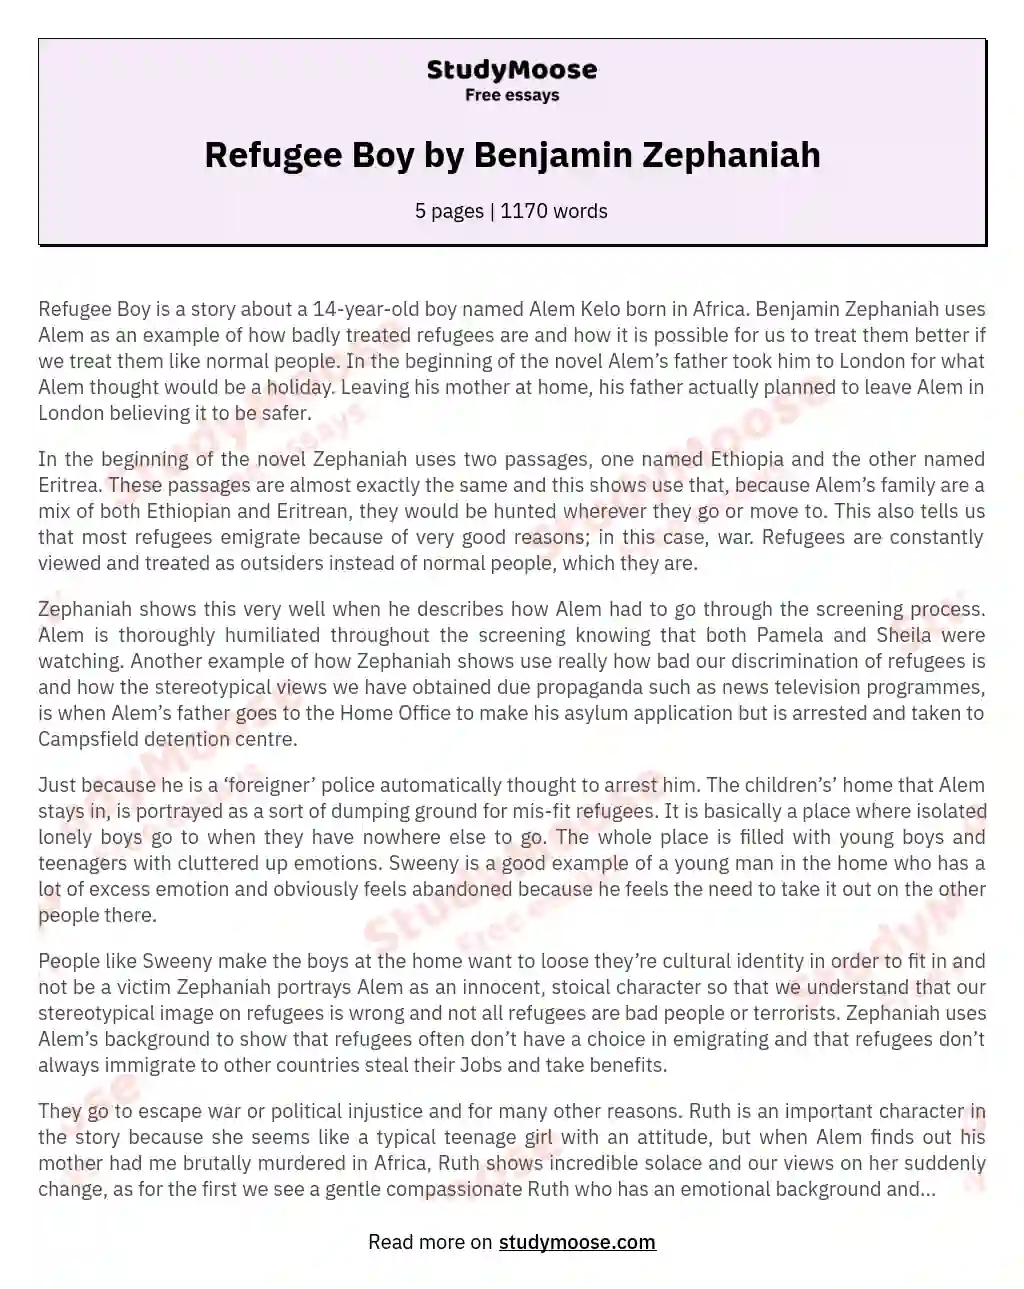 Refugee Boy by Benjamin Zephaniah essay